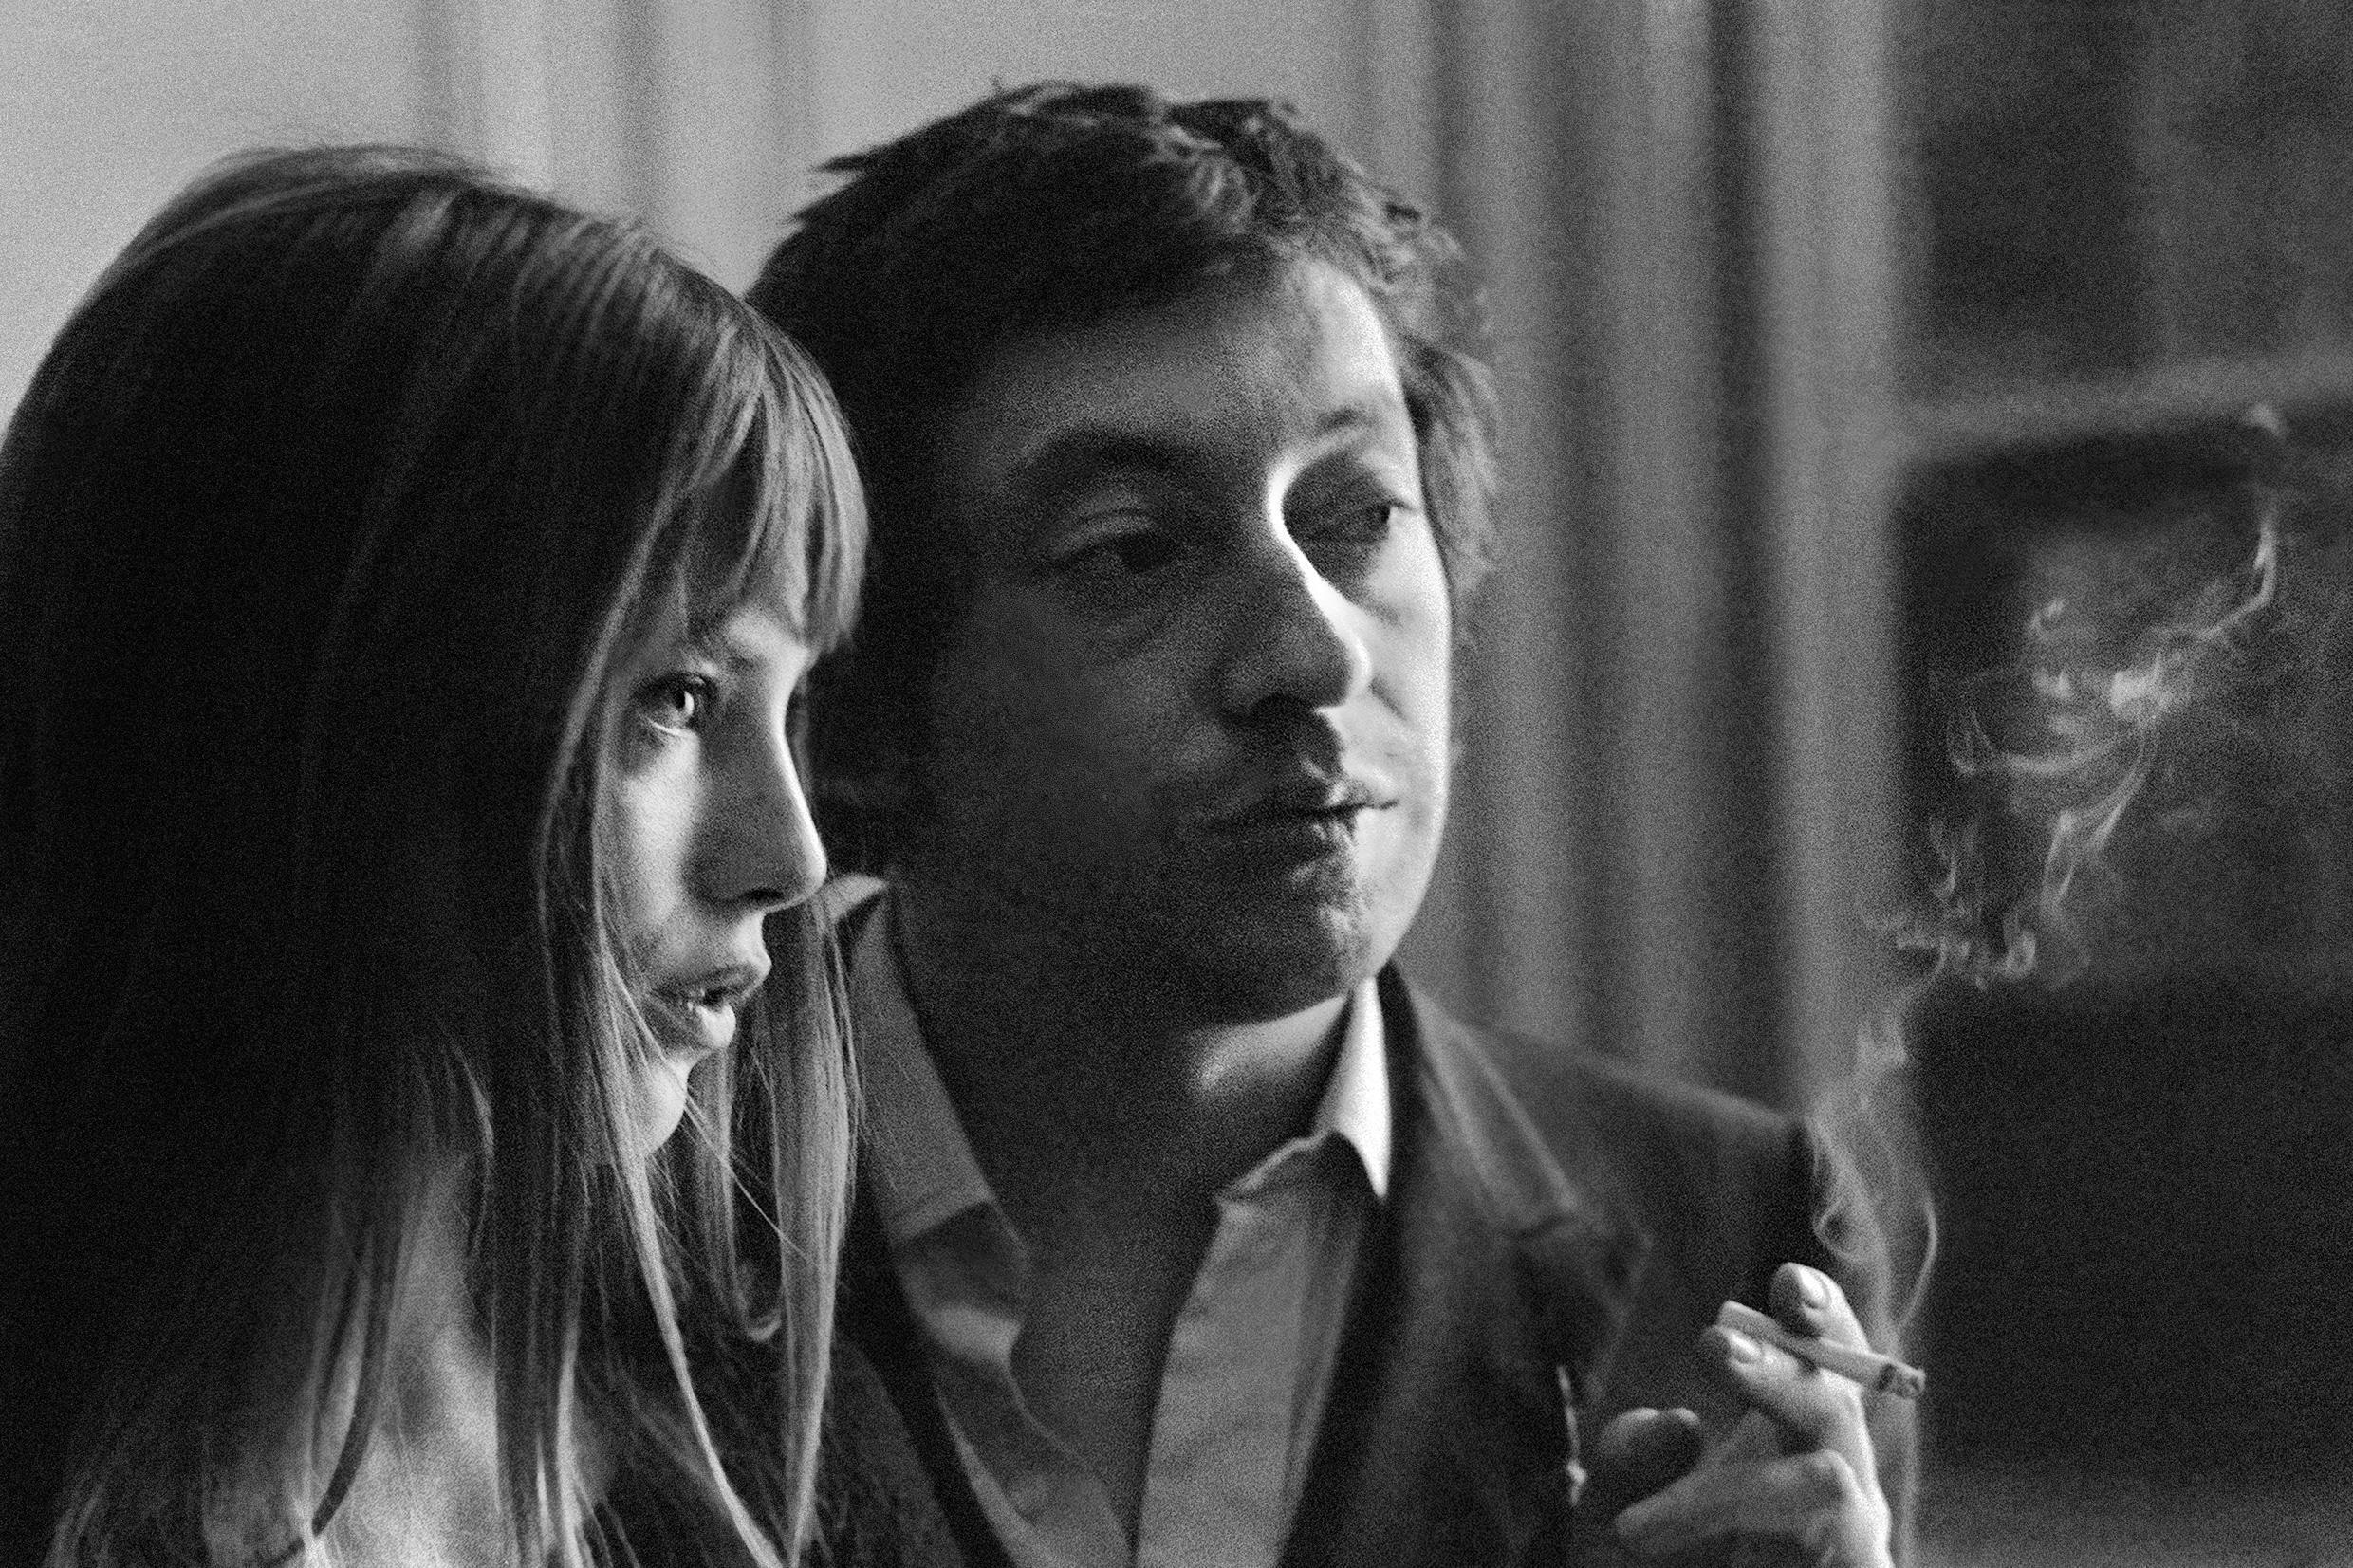 Jane Birkin et Serge Gainsbourg, en 1969.